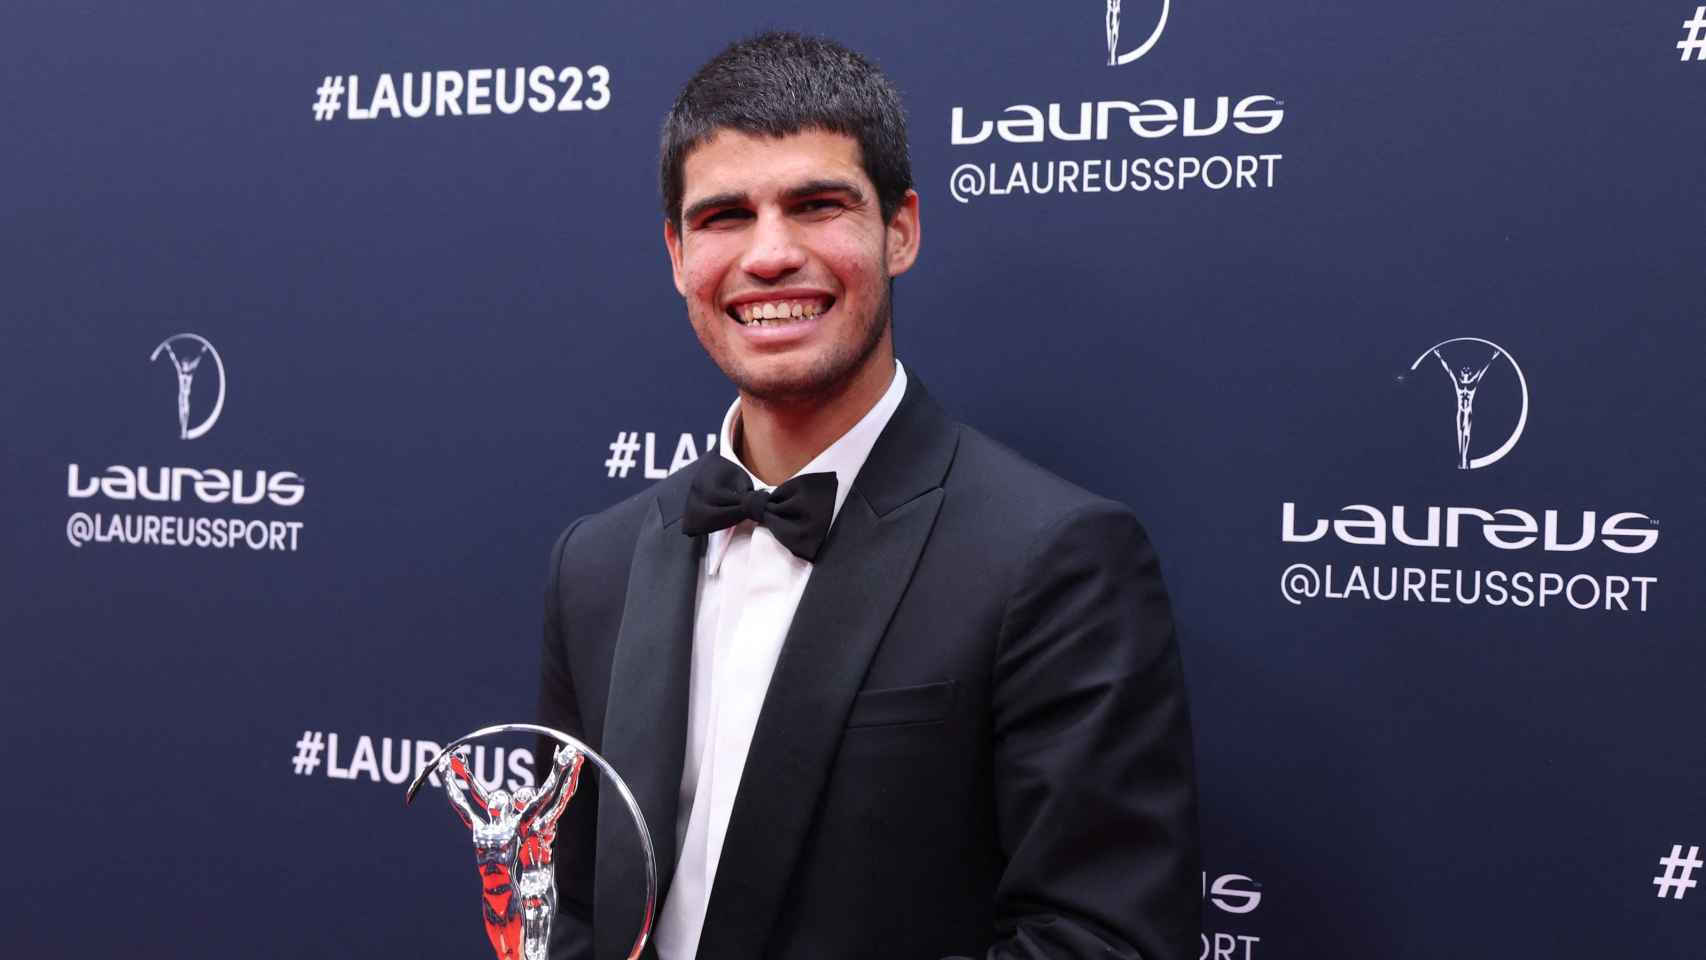 Tennis prodigy Carlos Alcaraz joins Louis Vuitton's family of ambassadors